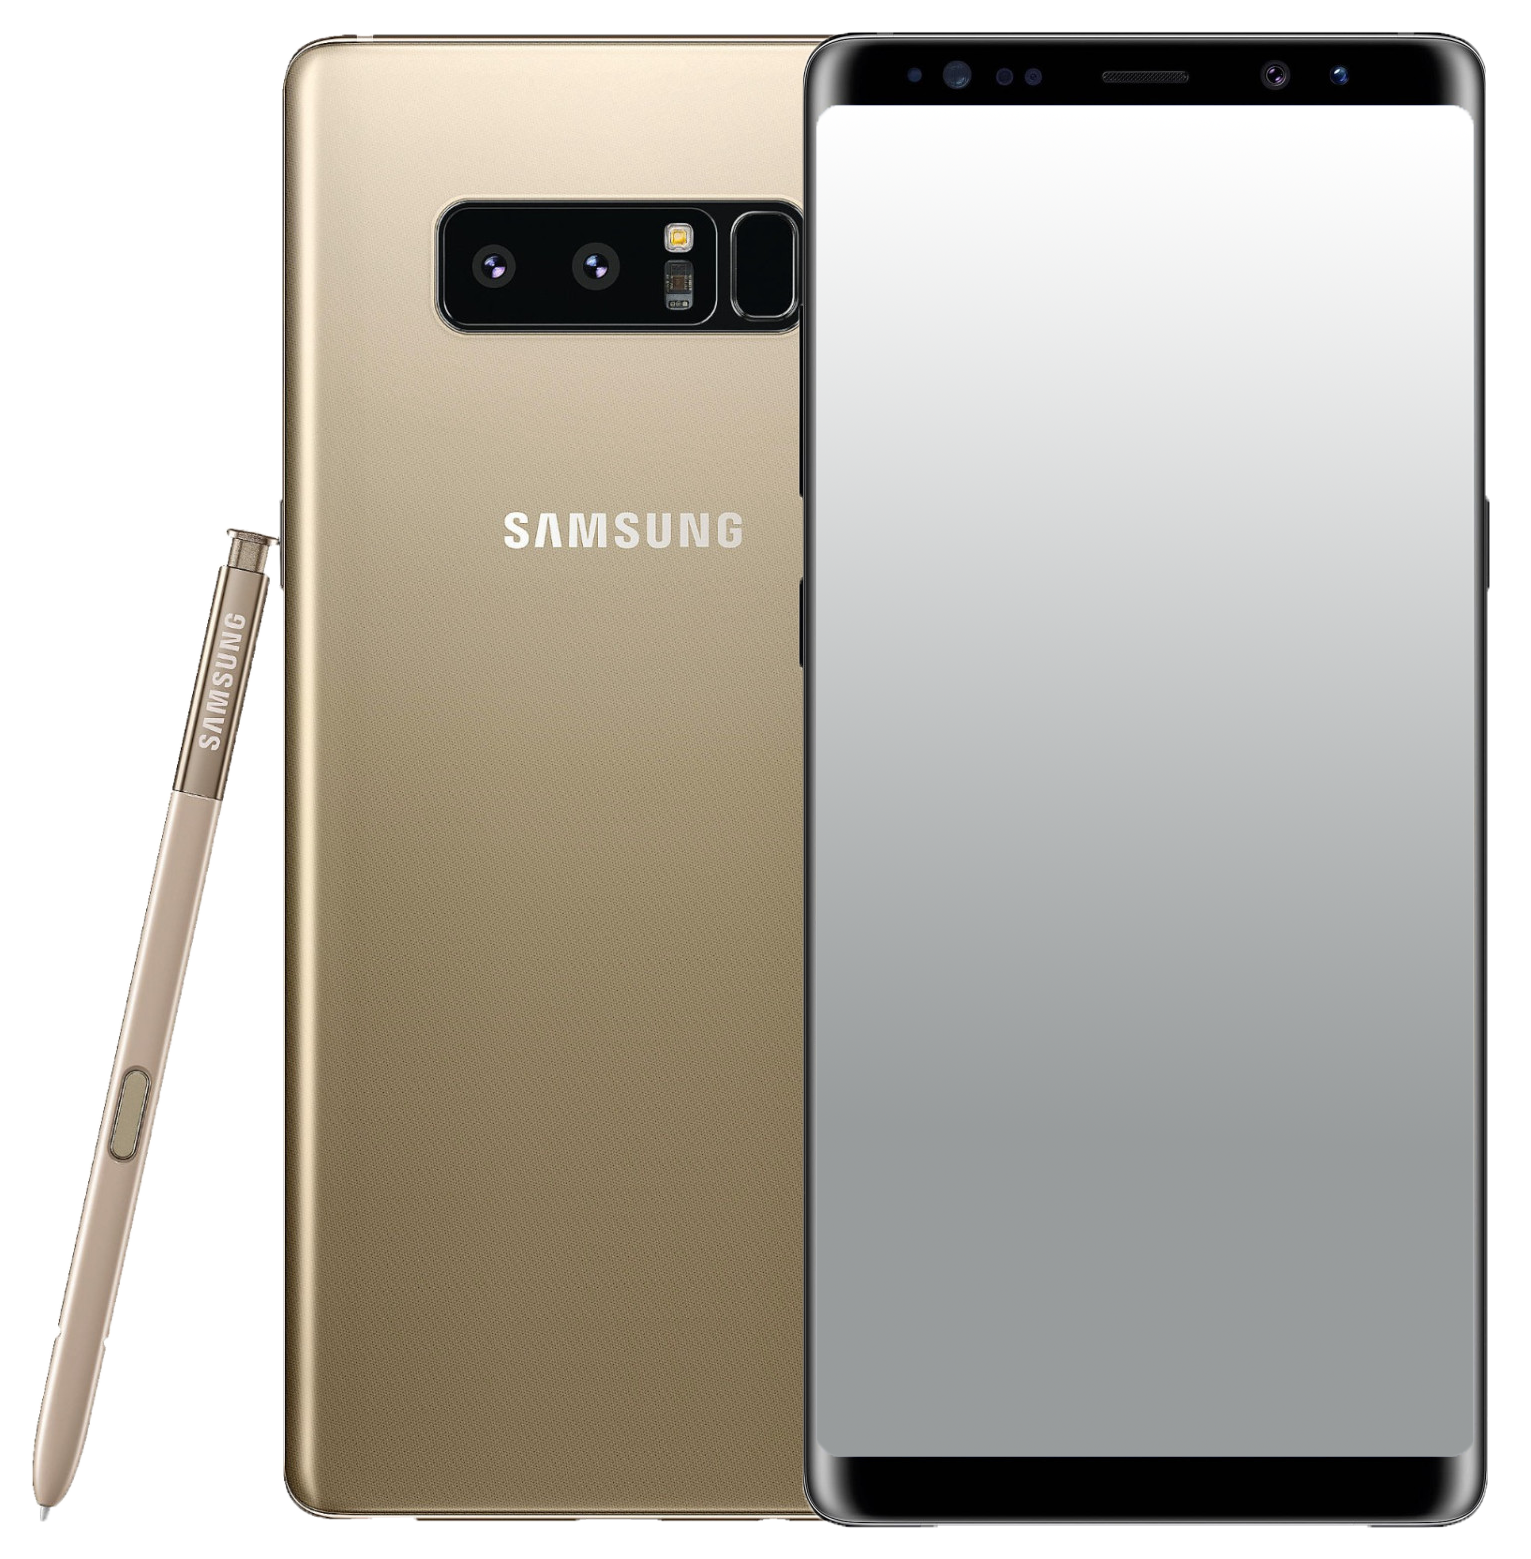 Samsung Galaxy Note 8 Single-SIM gold - Ohne Vertrag